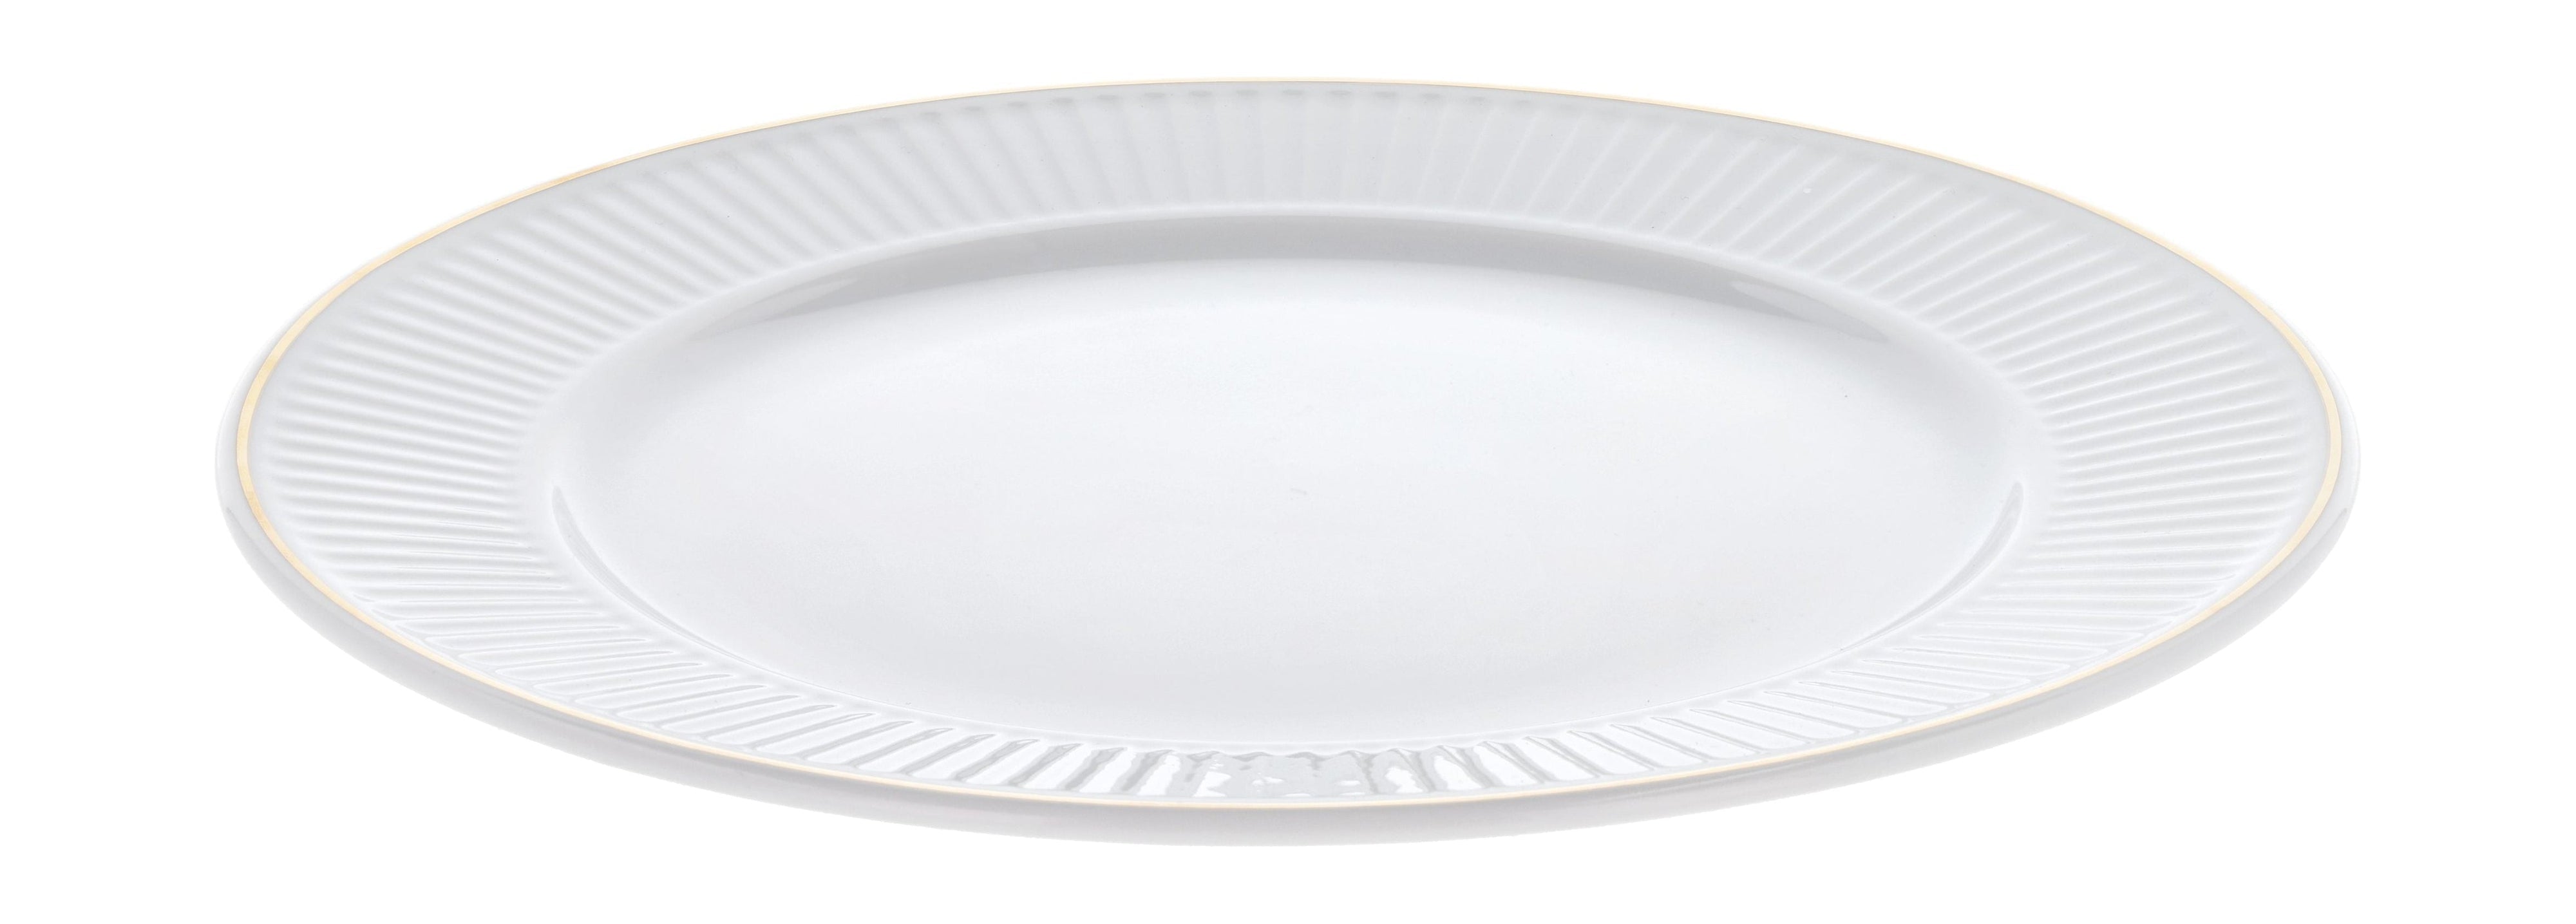 Piatto di pillovuyt Plate White/Matt Gold, Ø22 cm